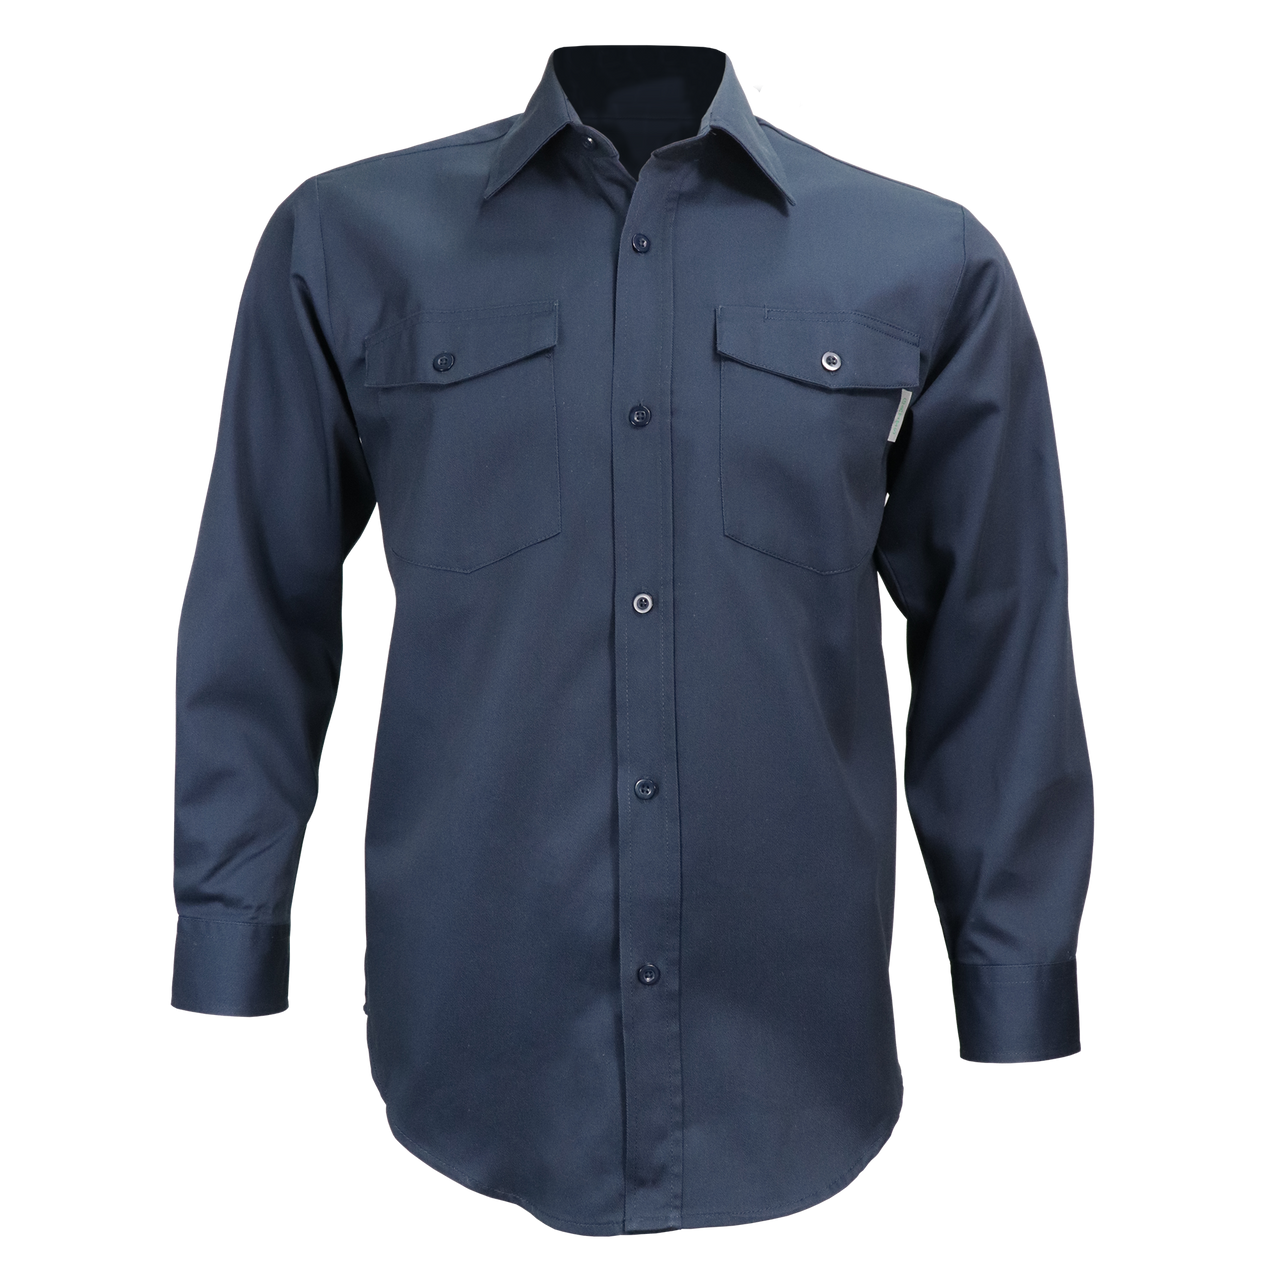 625 - Chemise à manches longues ||625 - Long sleeve shirt